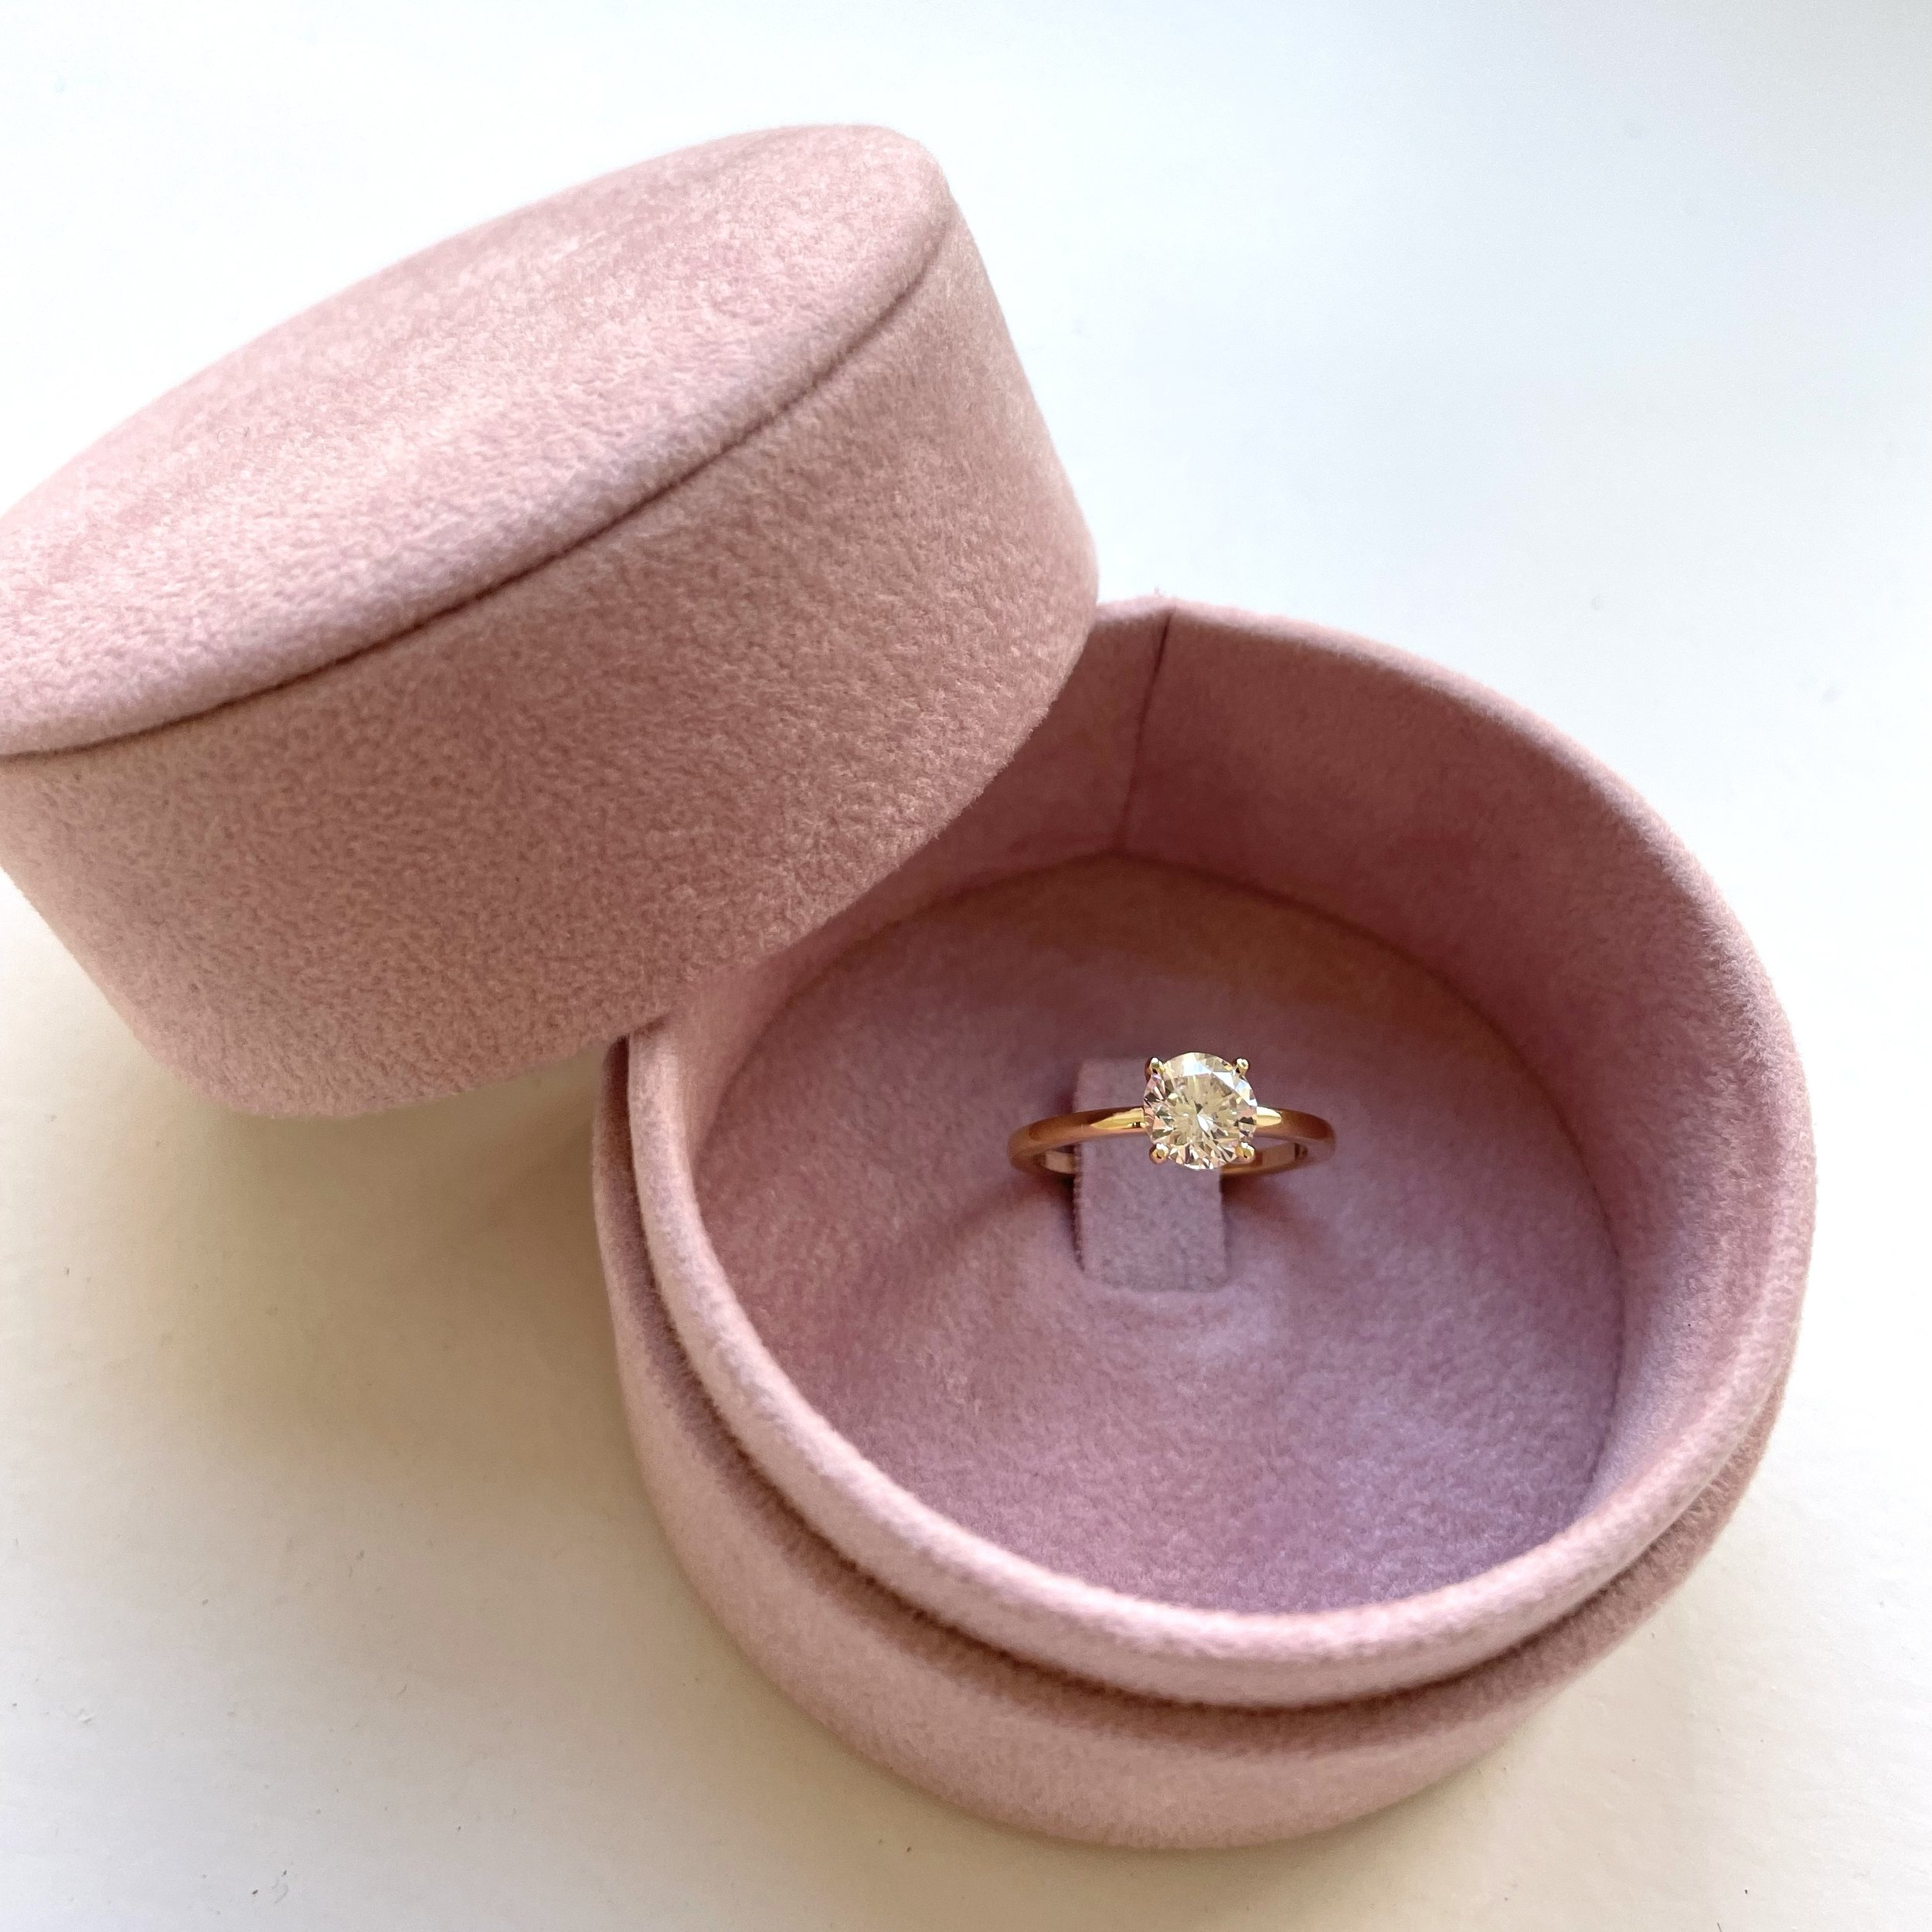 Custom-made ring in 18K gold